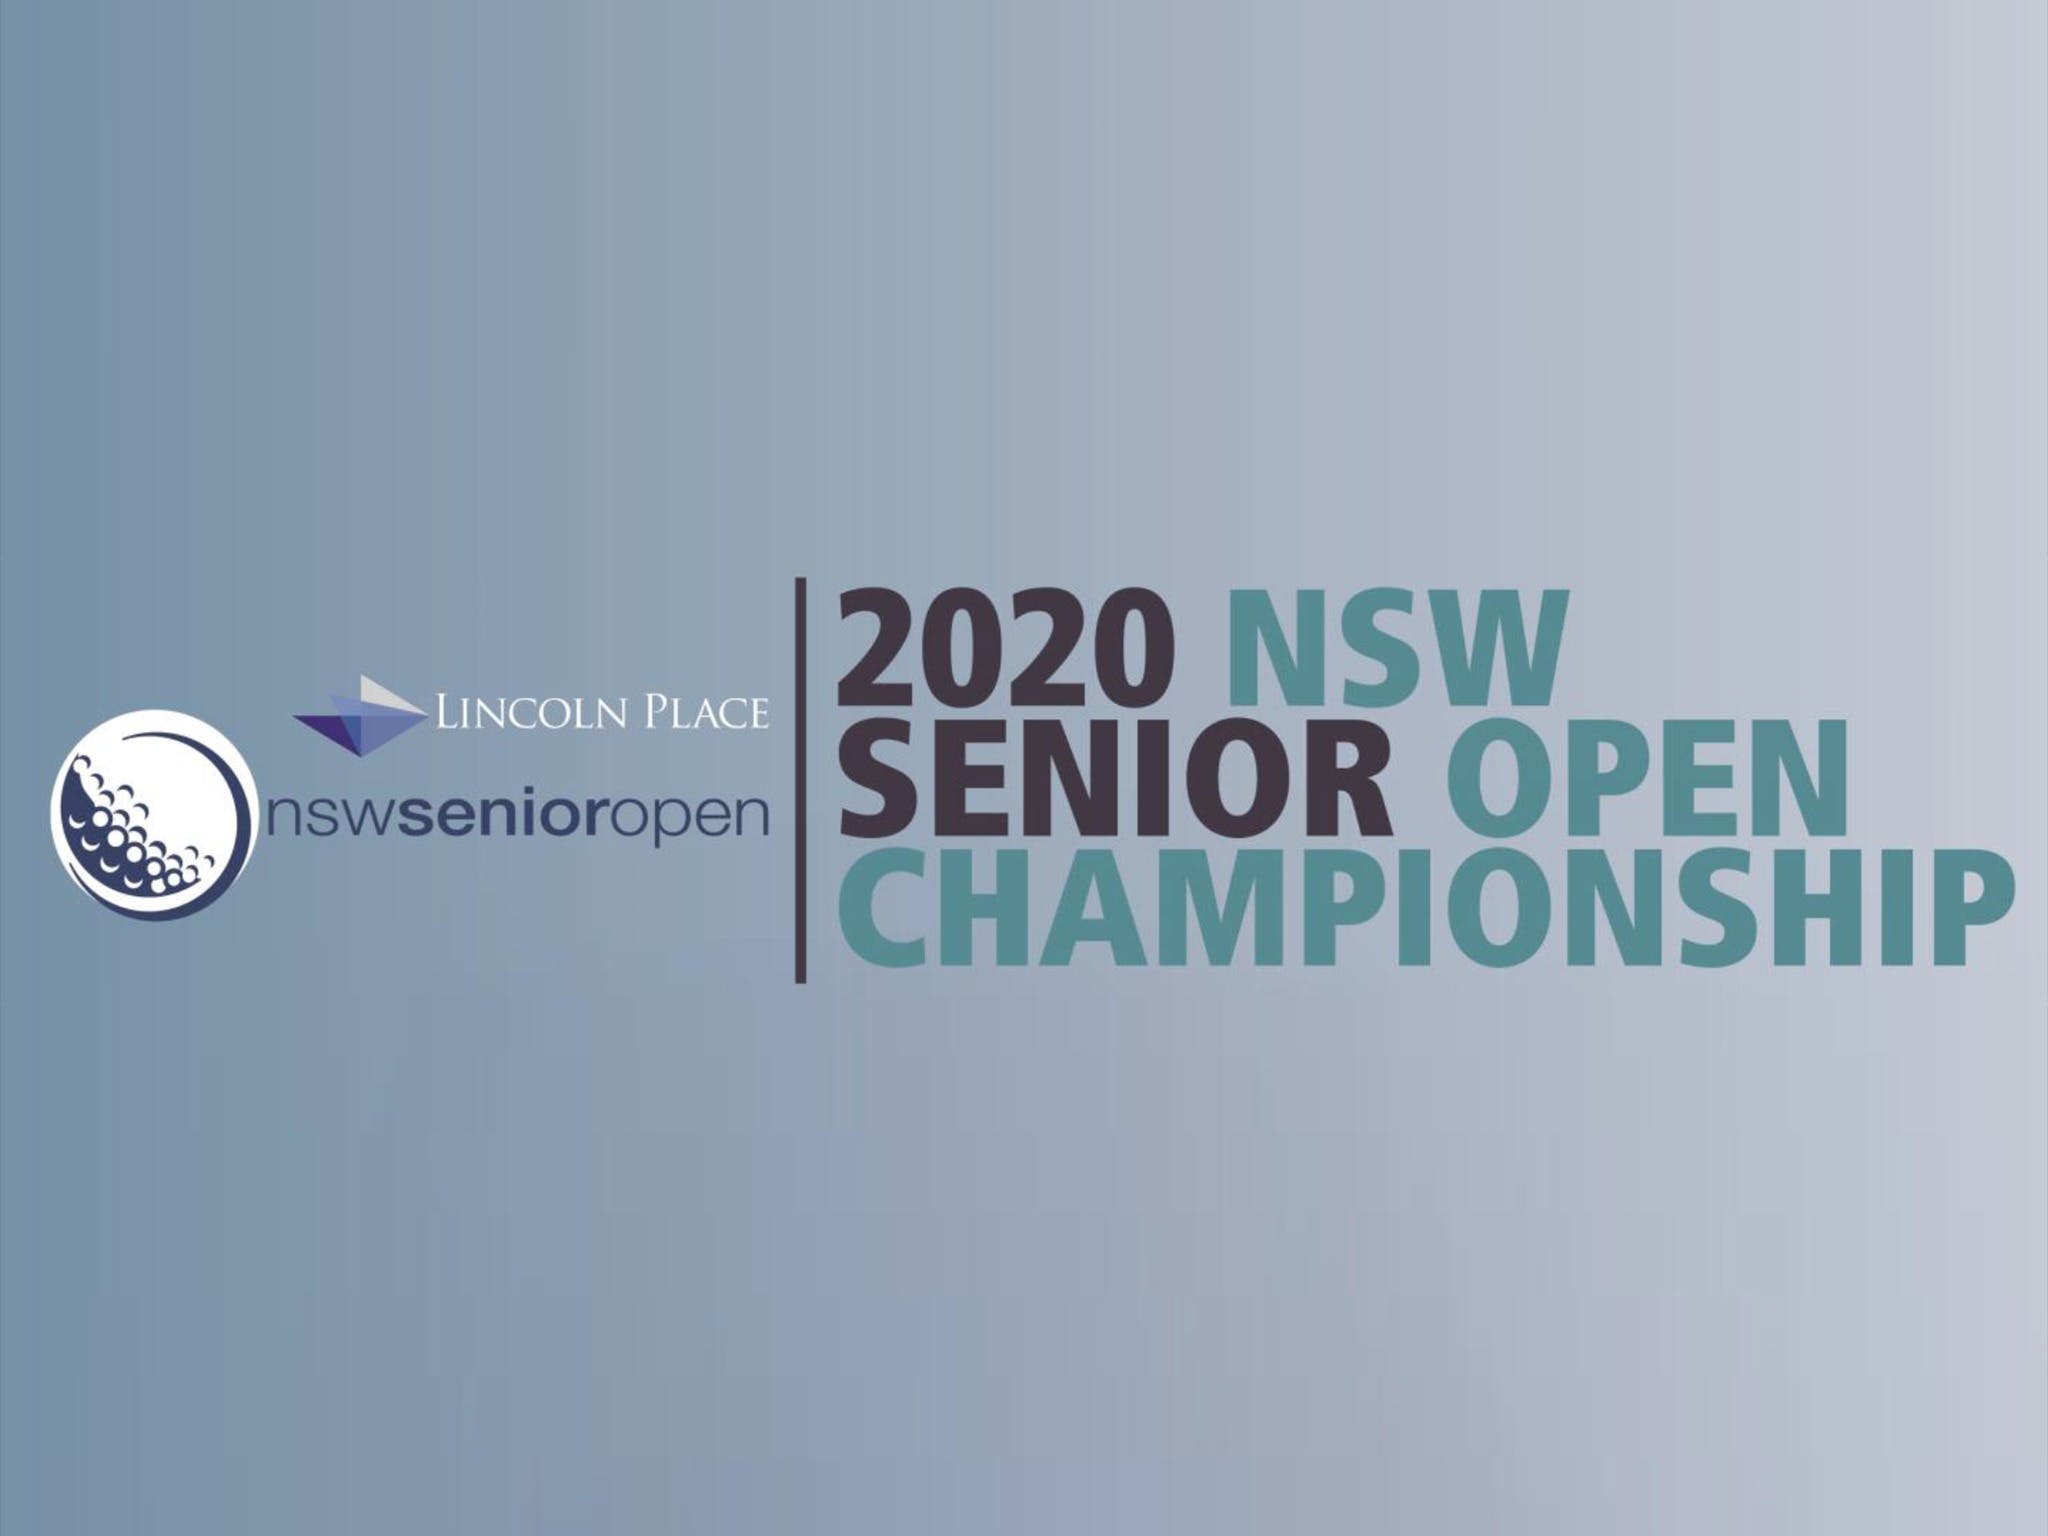 Men's NSW Senior Open